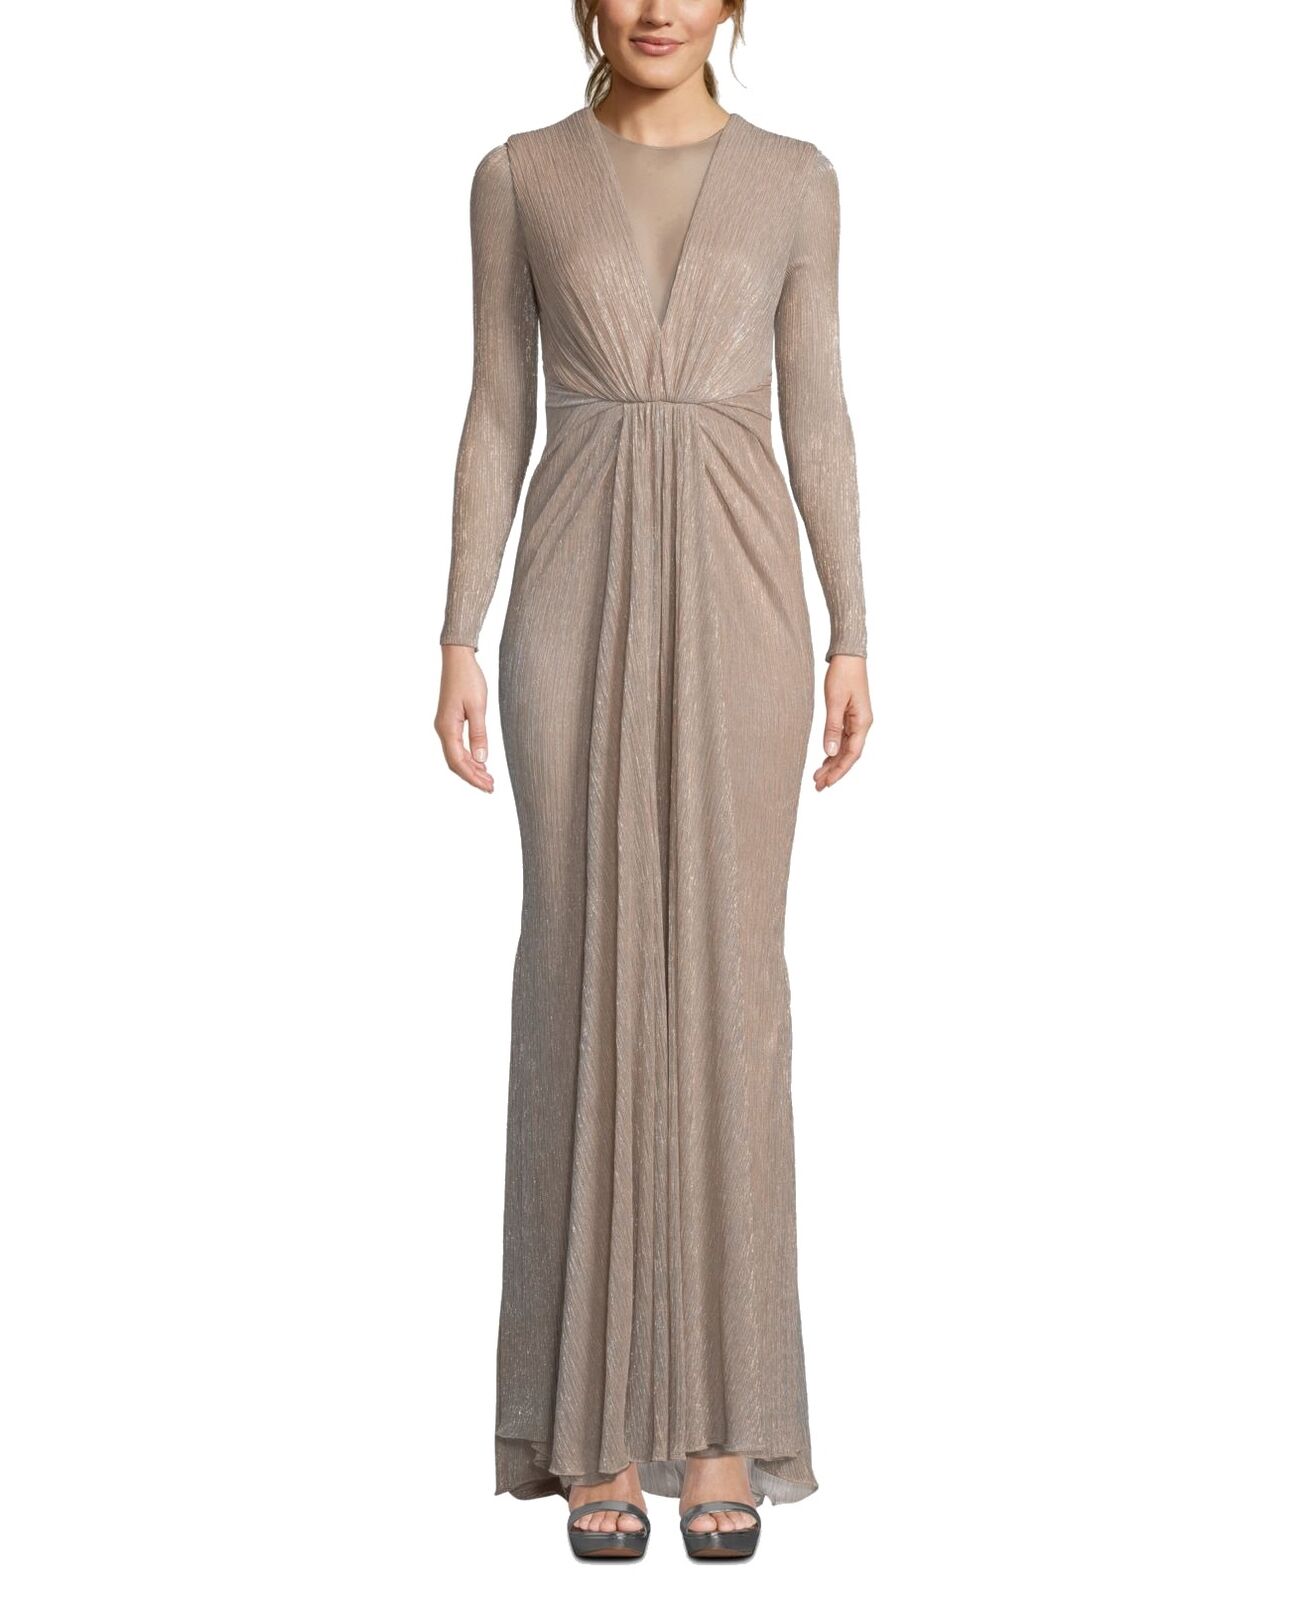 Betsy & Adam Women\'s Dress Beige Size 4 Metallic Illusion Ball Gown $249 #492